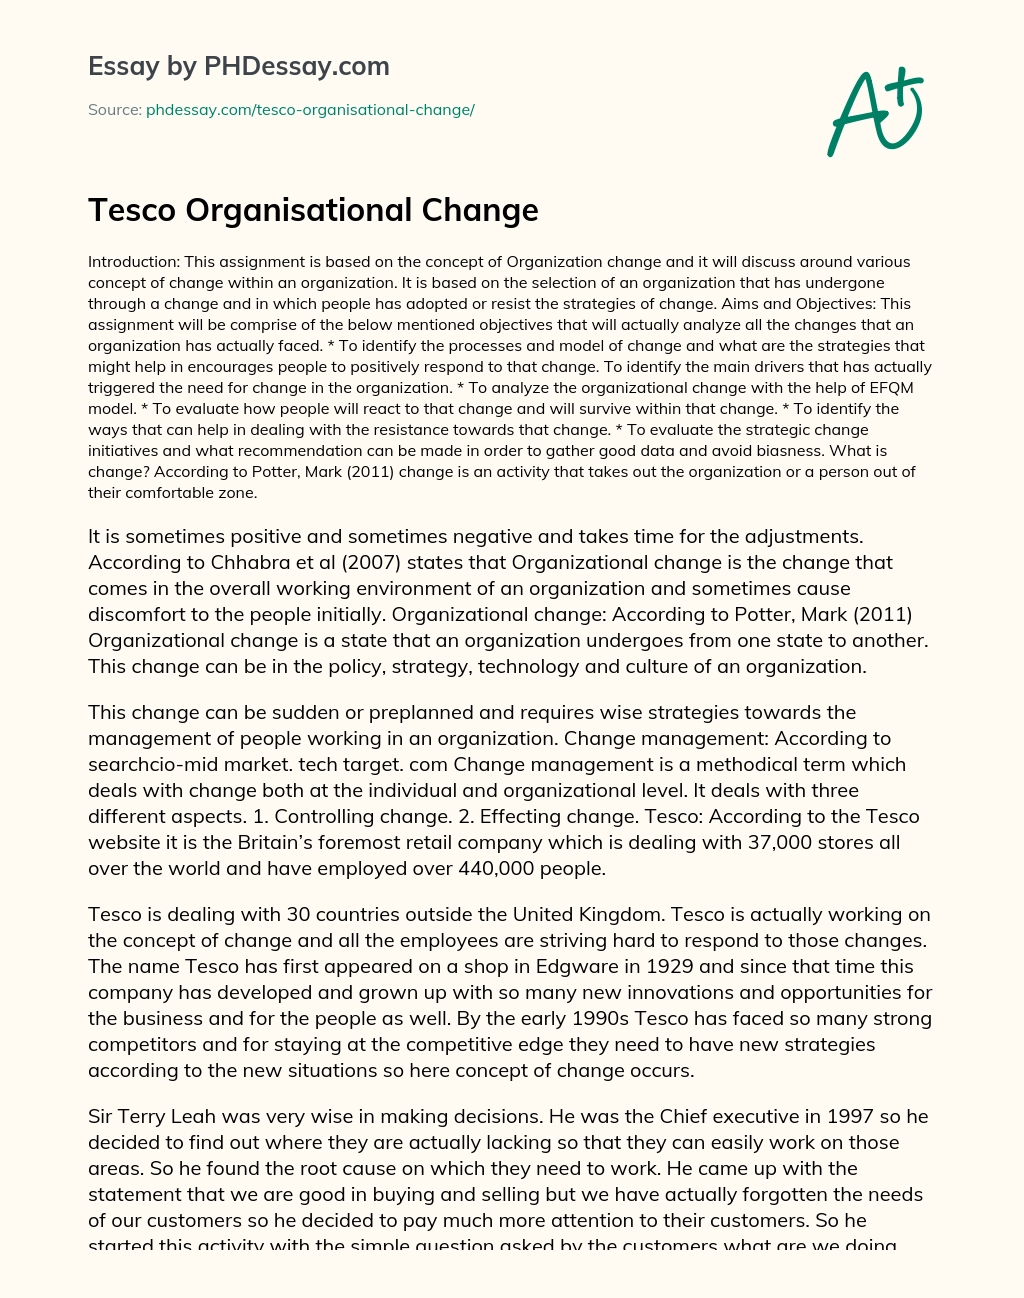 Tesco Organisational Change essay